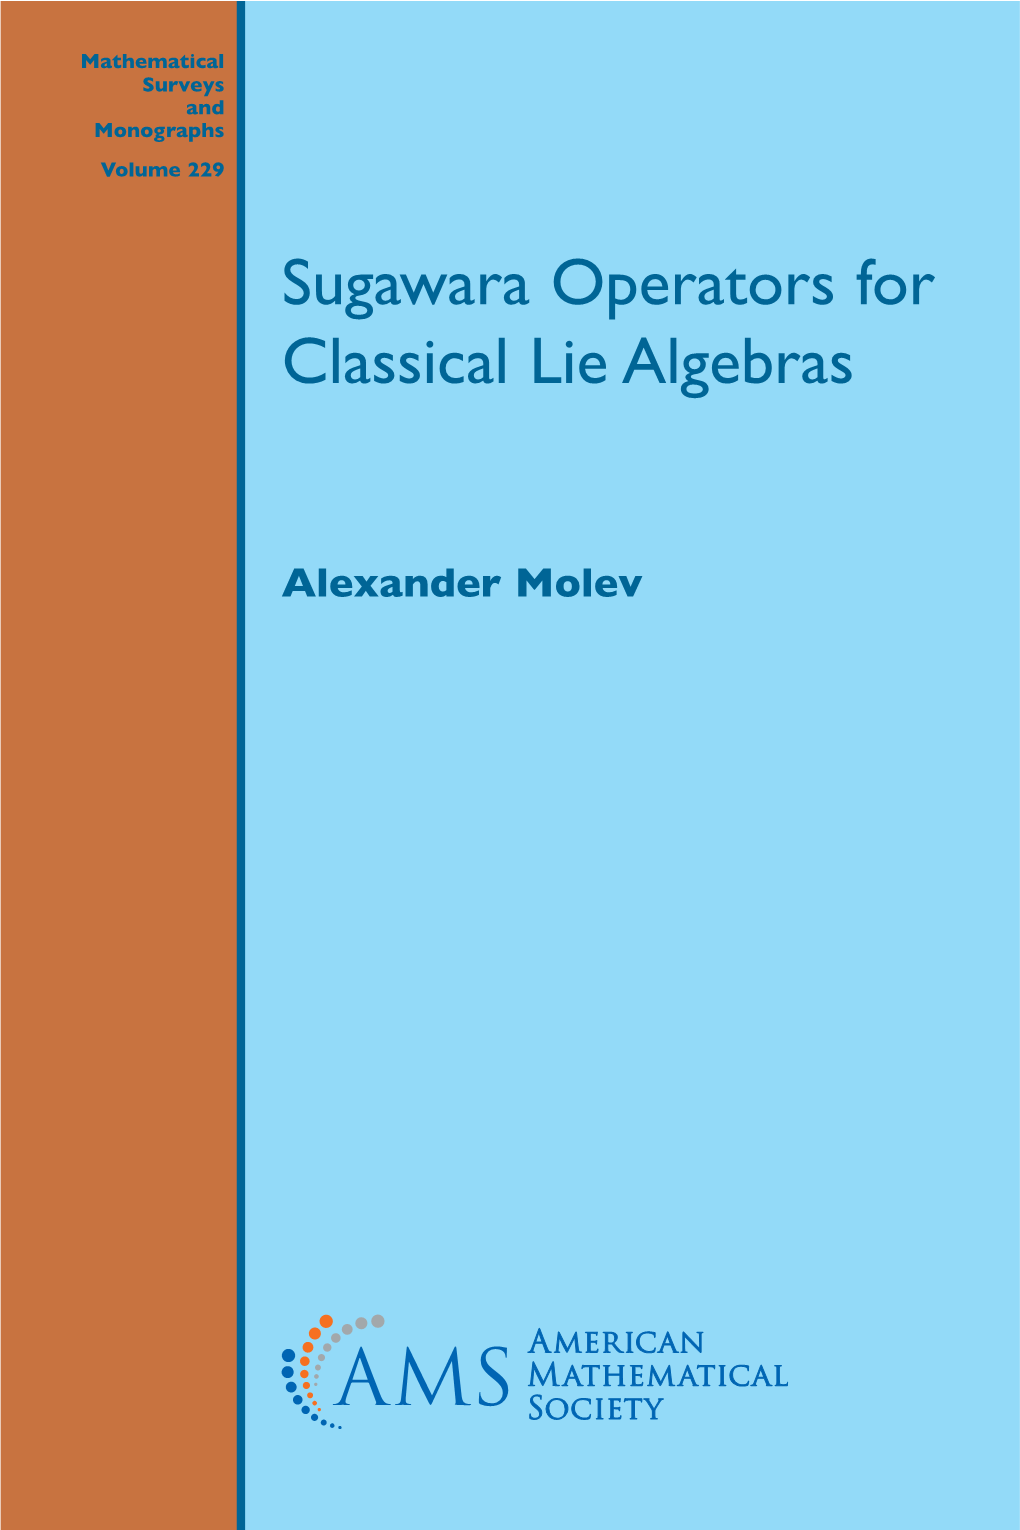 Sugawara Operators for Classical Lie Algebras